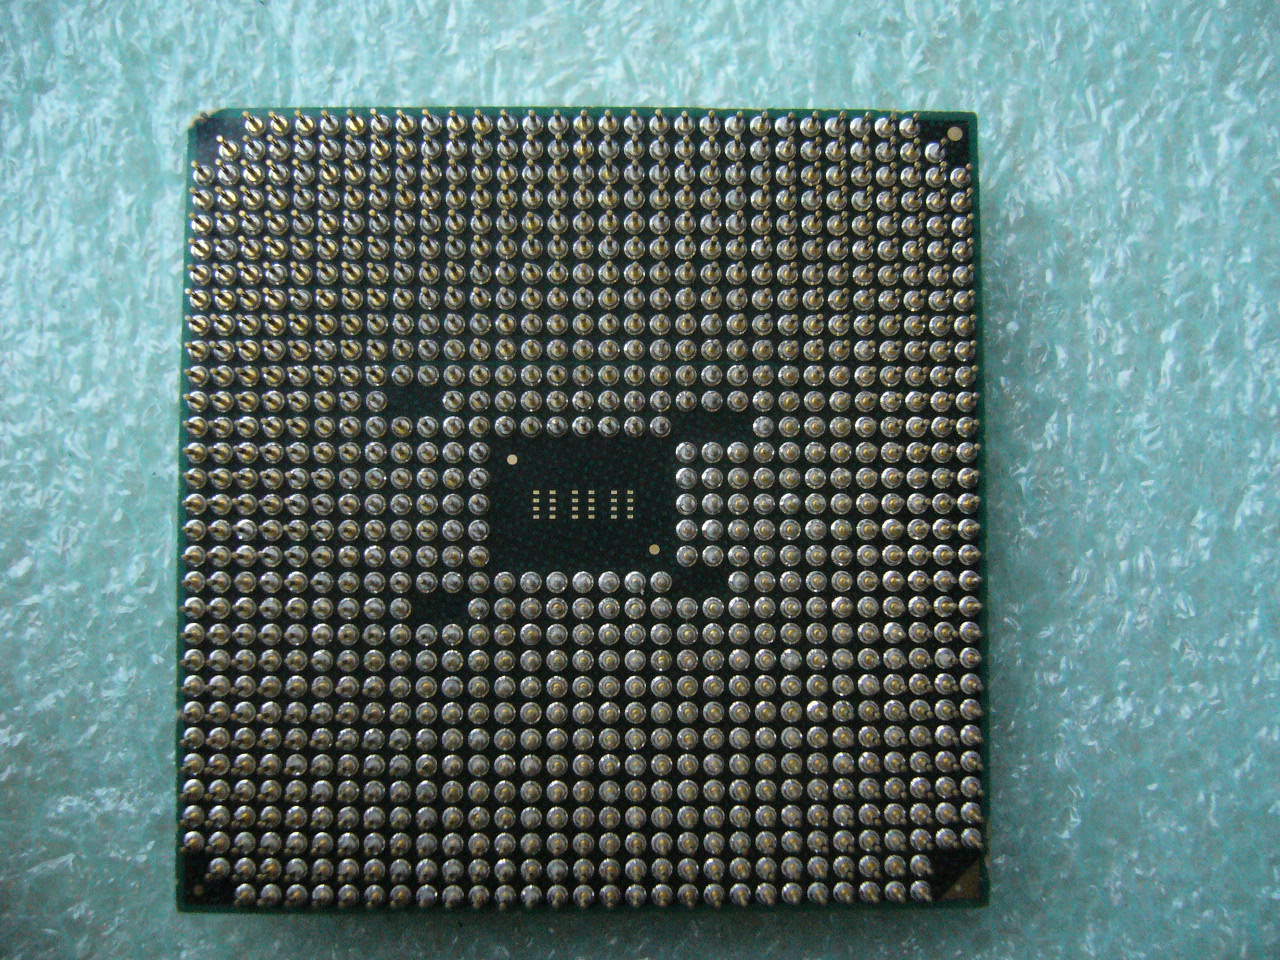 QTY 1x AMD A4-6300 B 3.7 GHz Dual-Core (AD630BOKA23HL) CPU Socket FM2 - zum Schließen ins Bild klicken